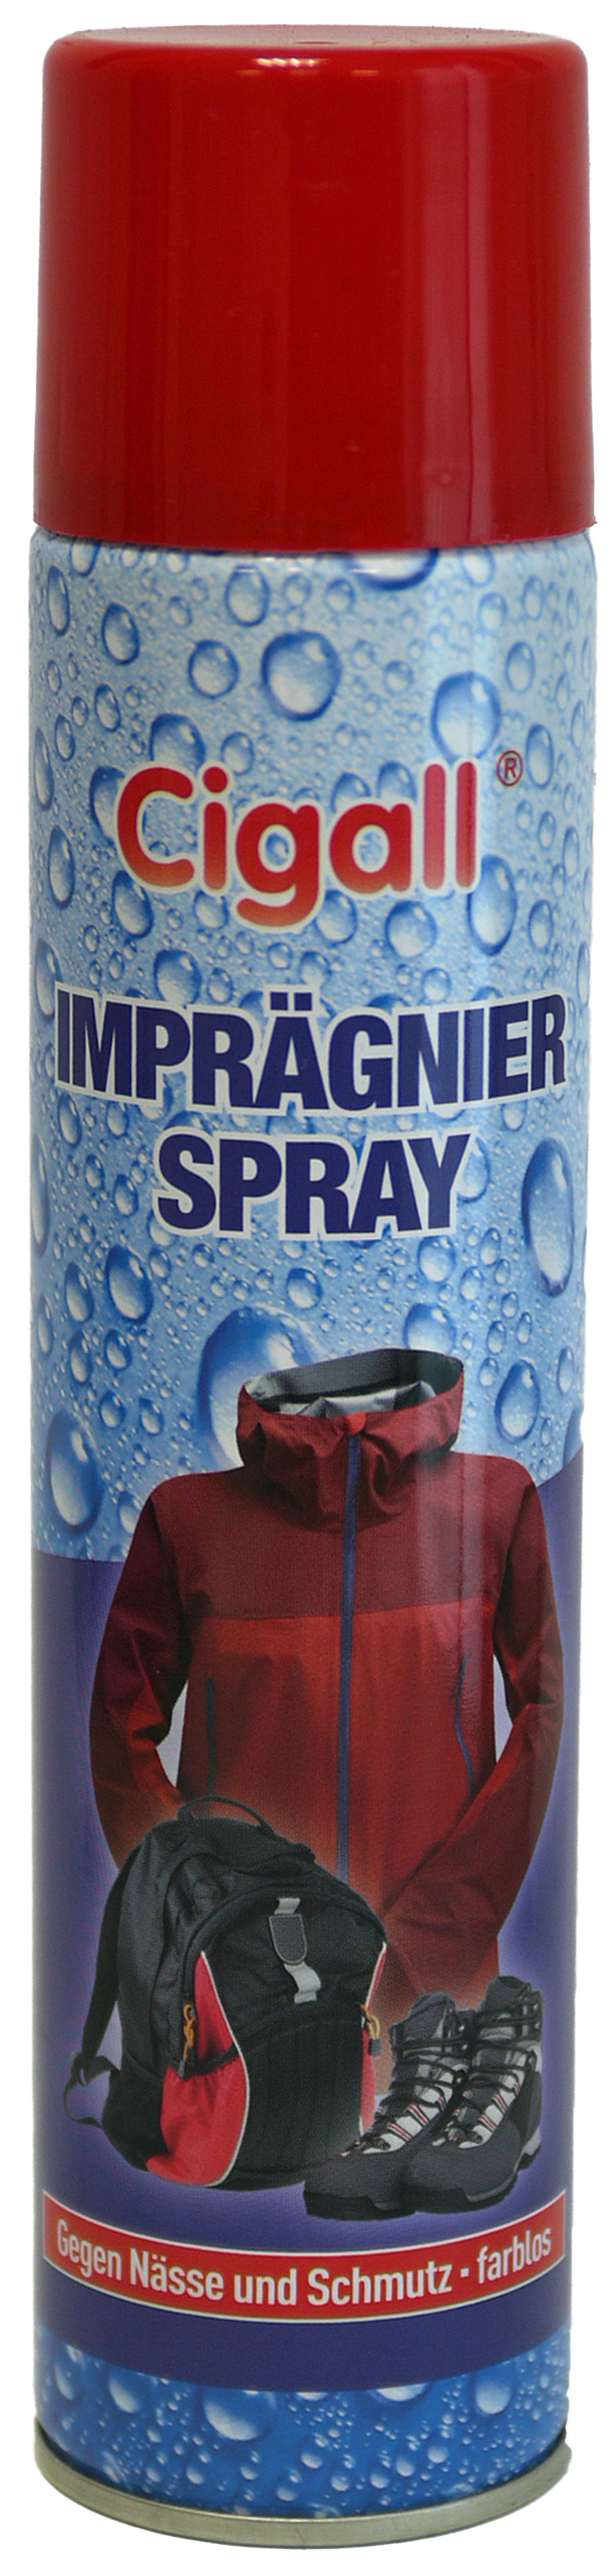 00653 - impregnation spray 300 ml